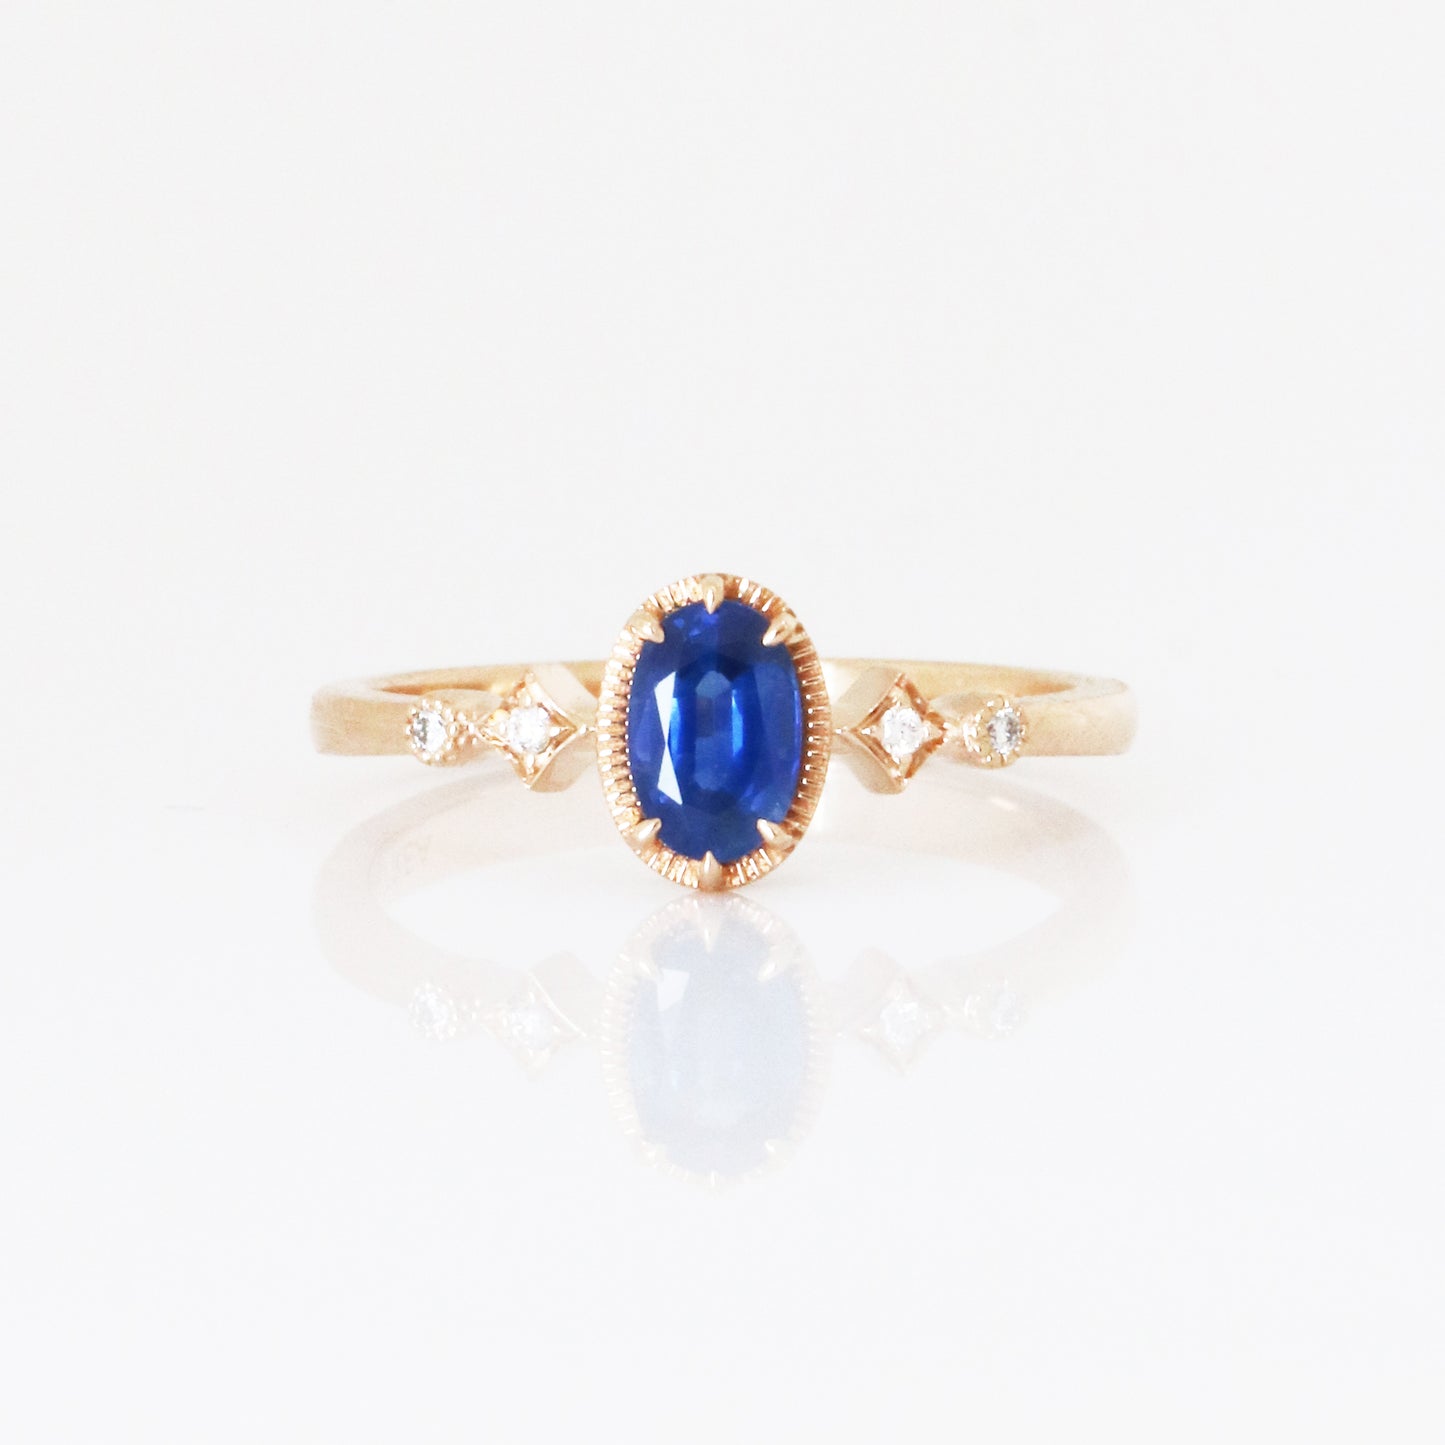 18k玫瑰金復古藍寶石鑽石戒指 18k Rose Gold Vintage Sapphire Diamond Ring